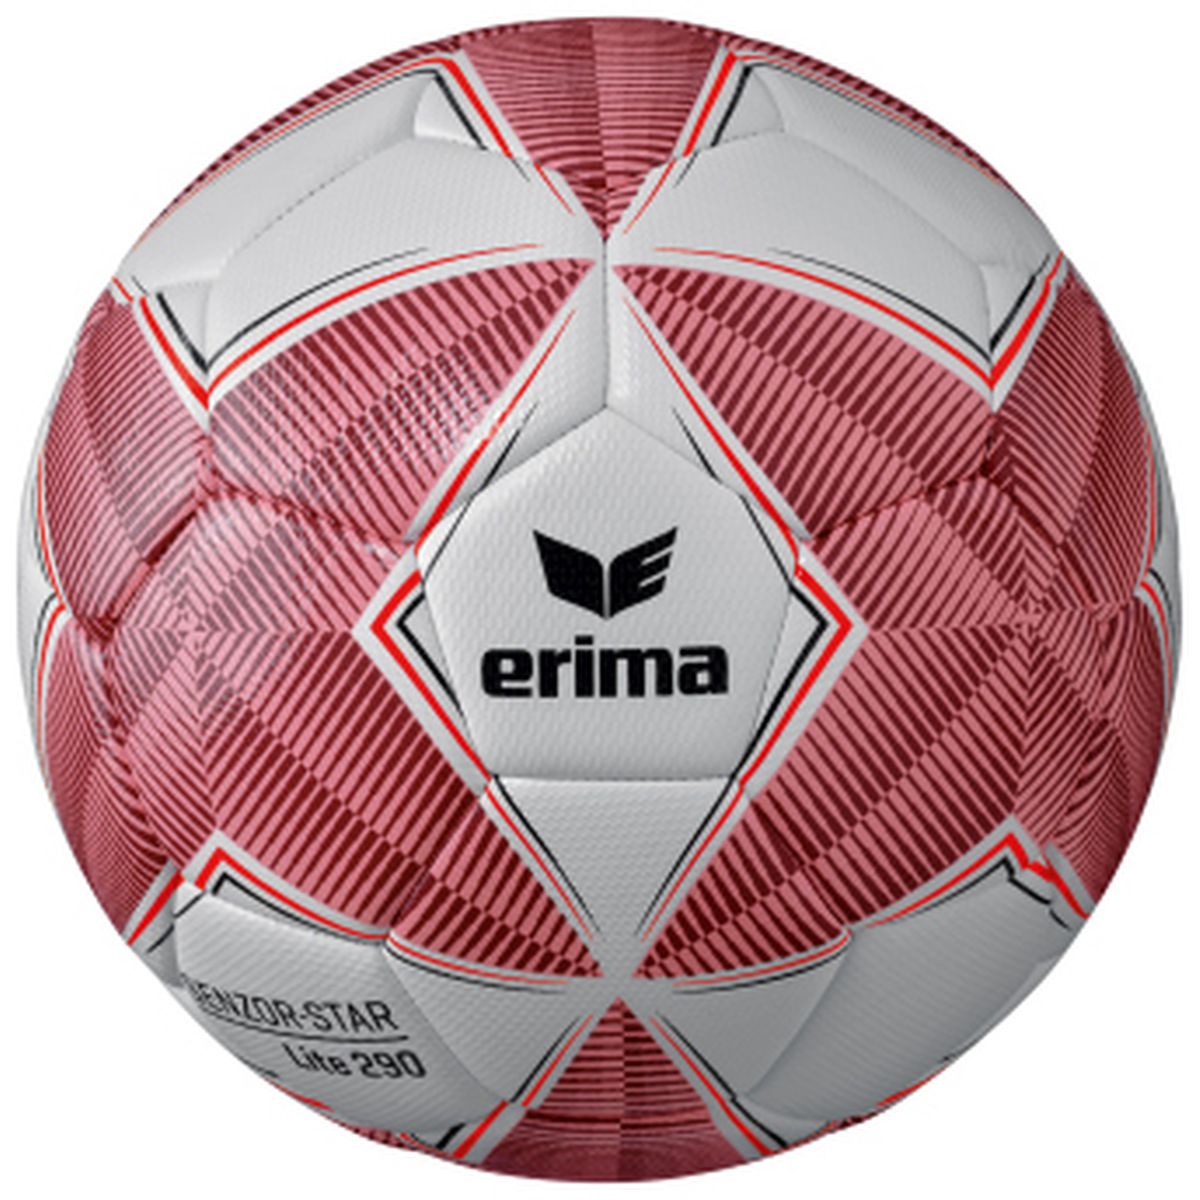 Erima Senzor-Star Lite 290 Outdoor-Fußball